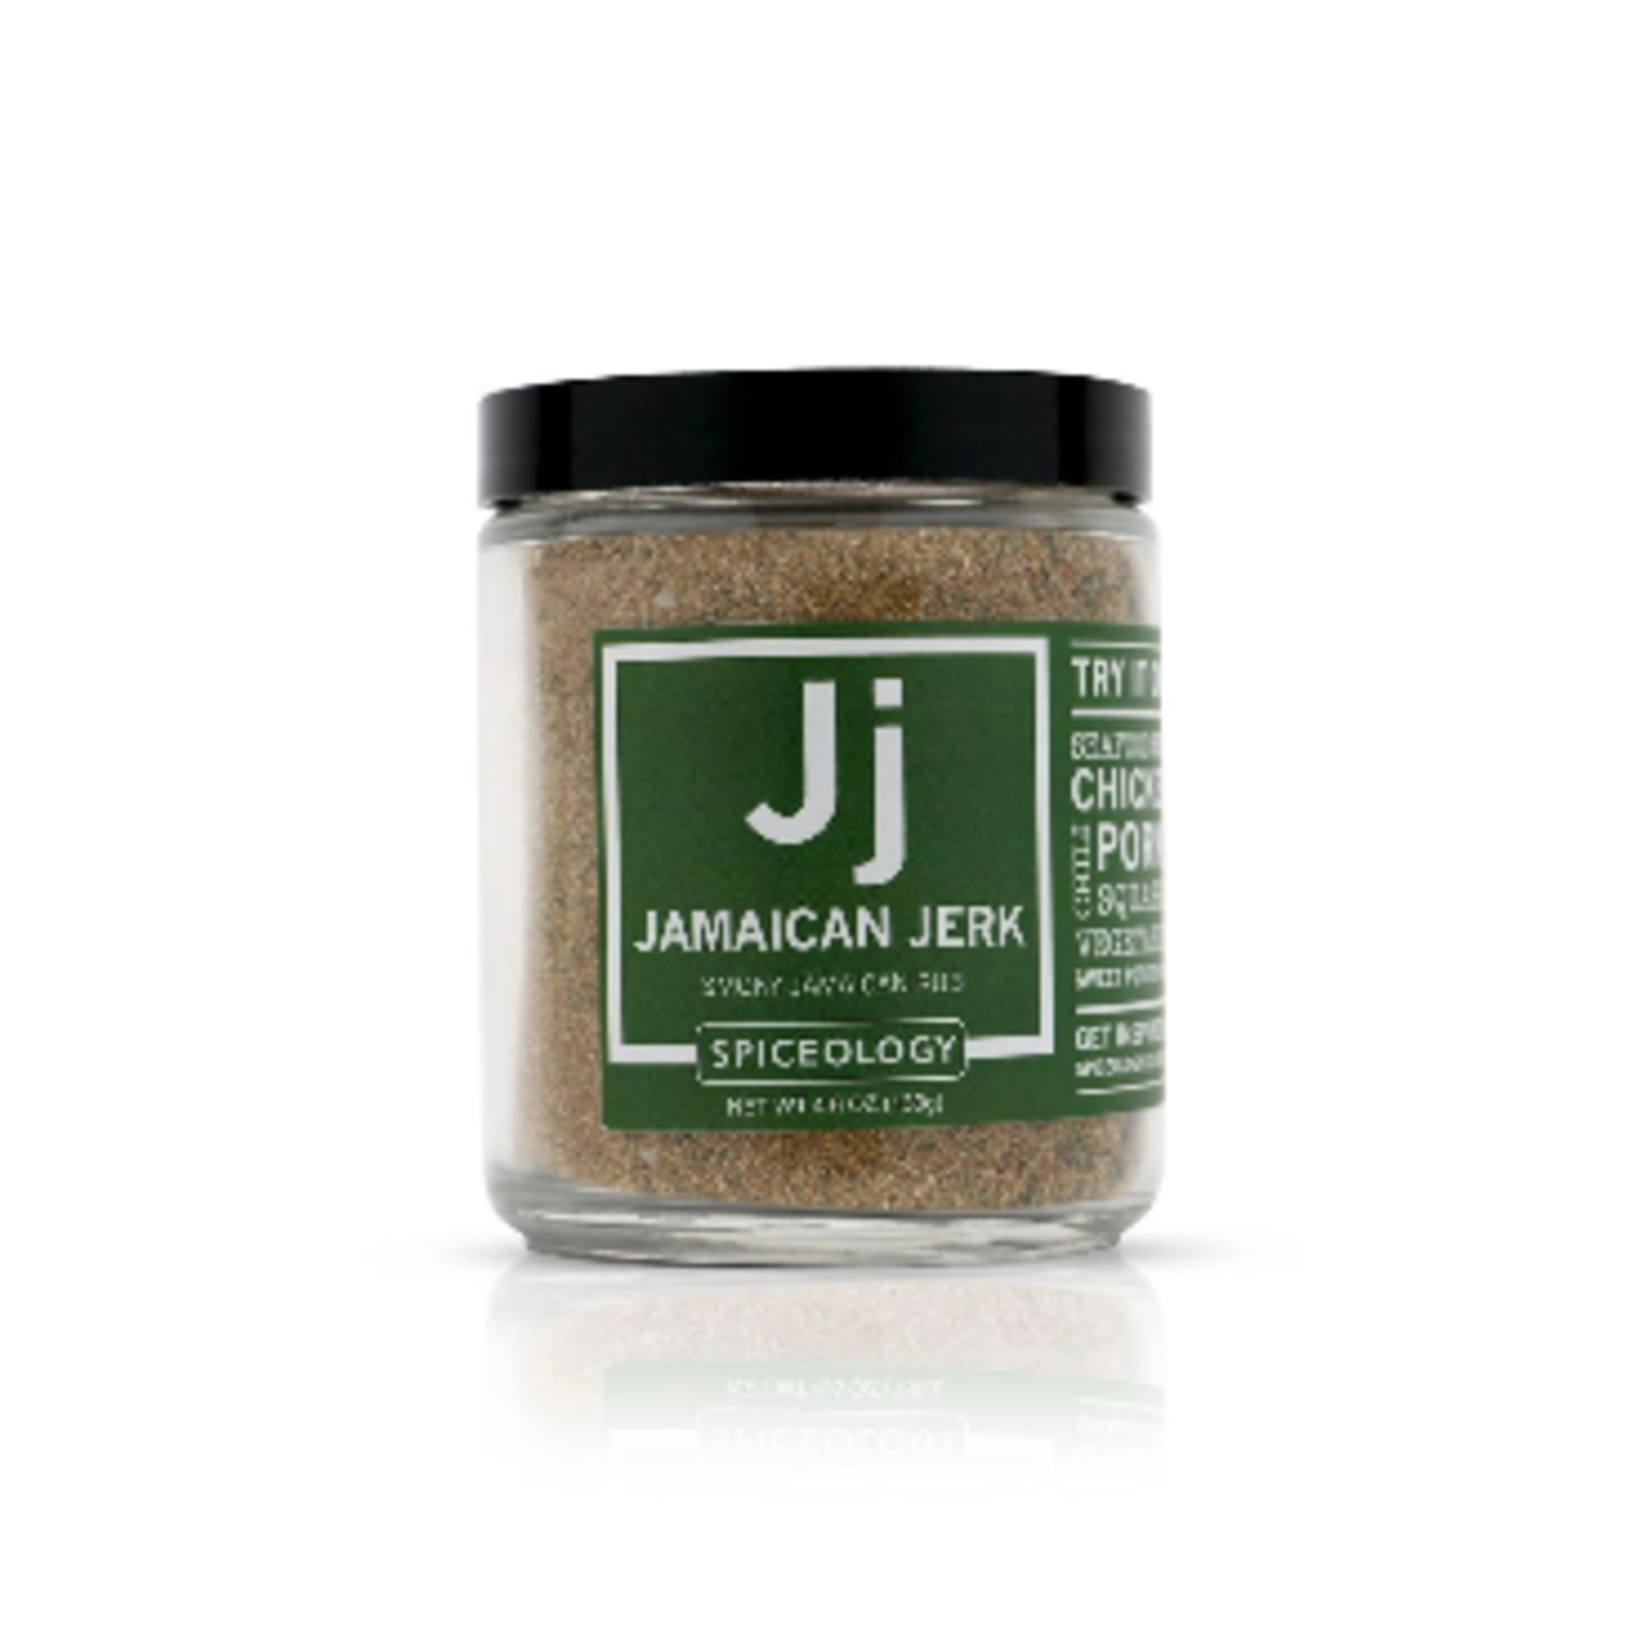 Spiceology Jamaican Jerk, Jar